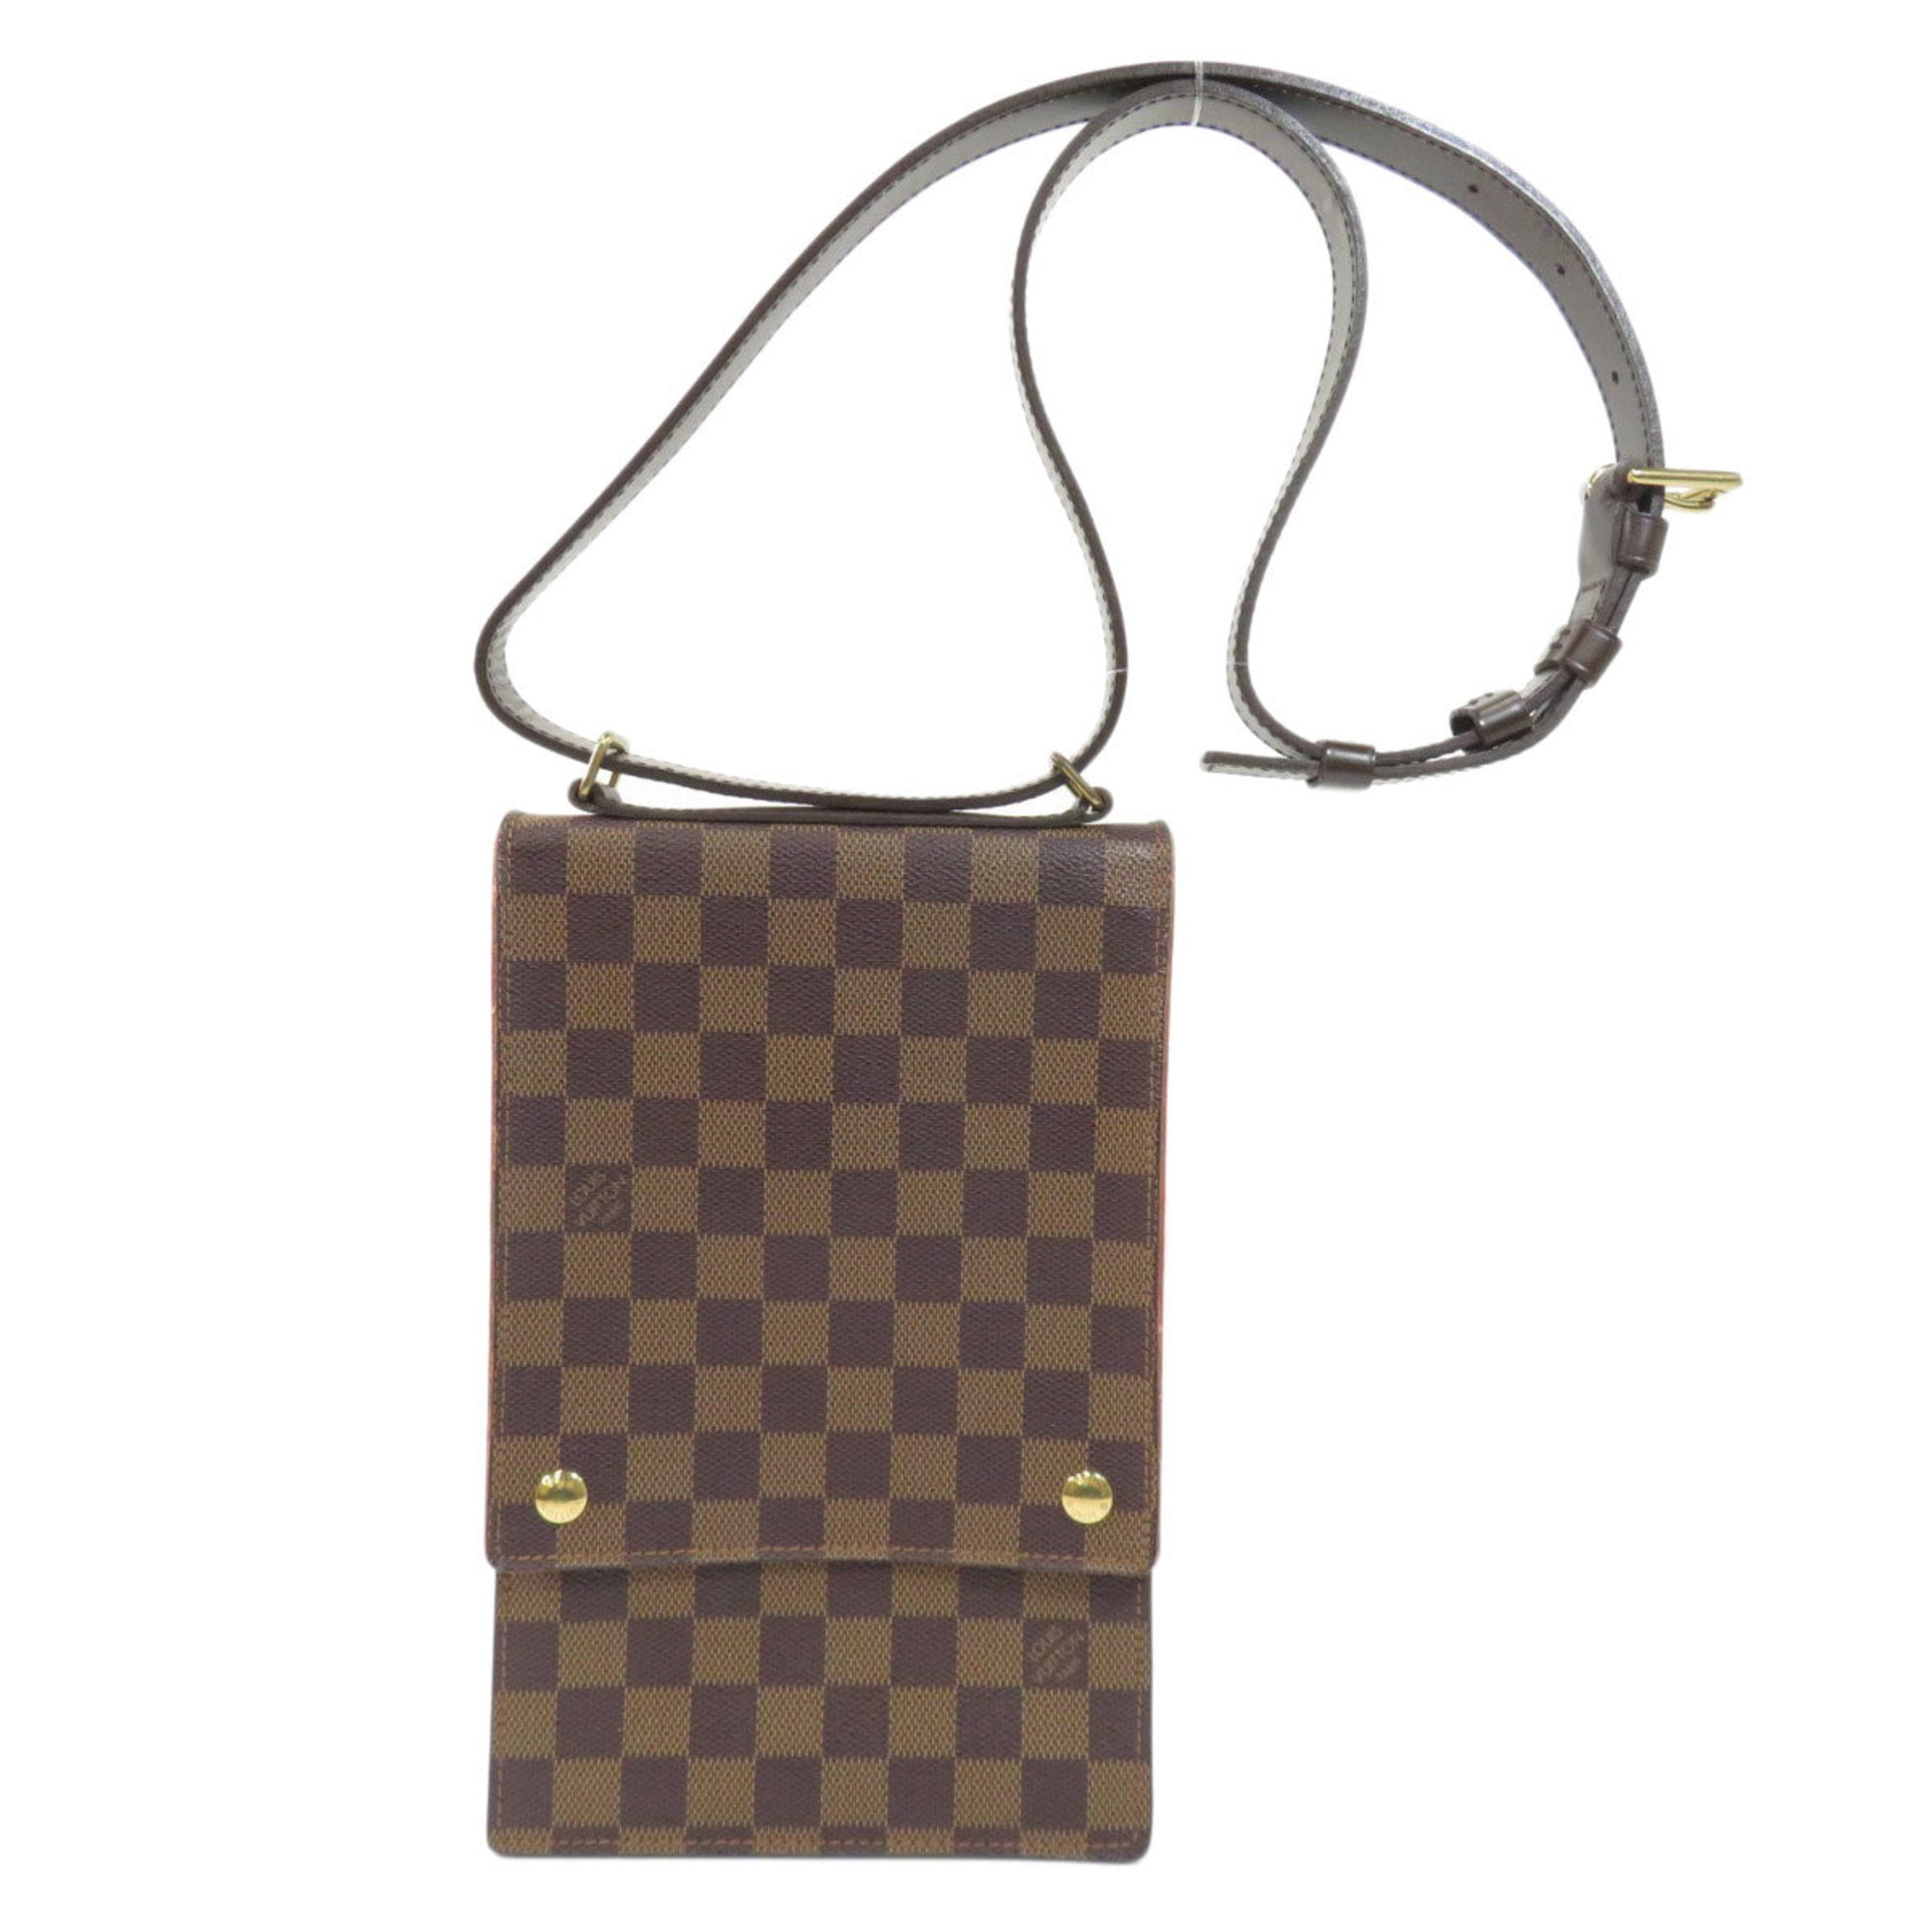 Louis Vuitton Portobello Womens shoulder bag N45271 damier ebene